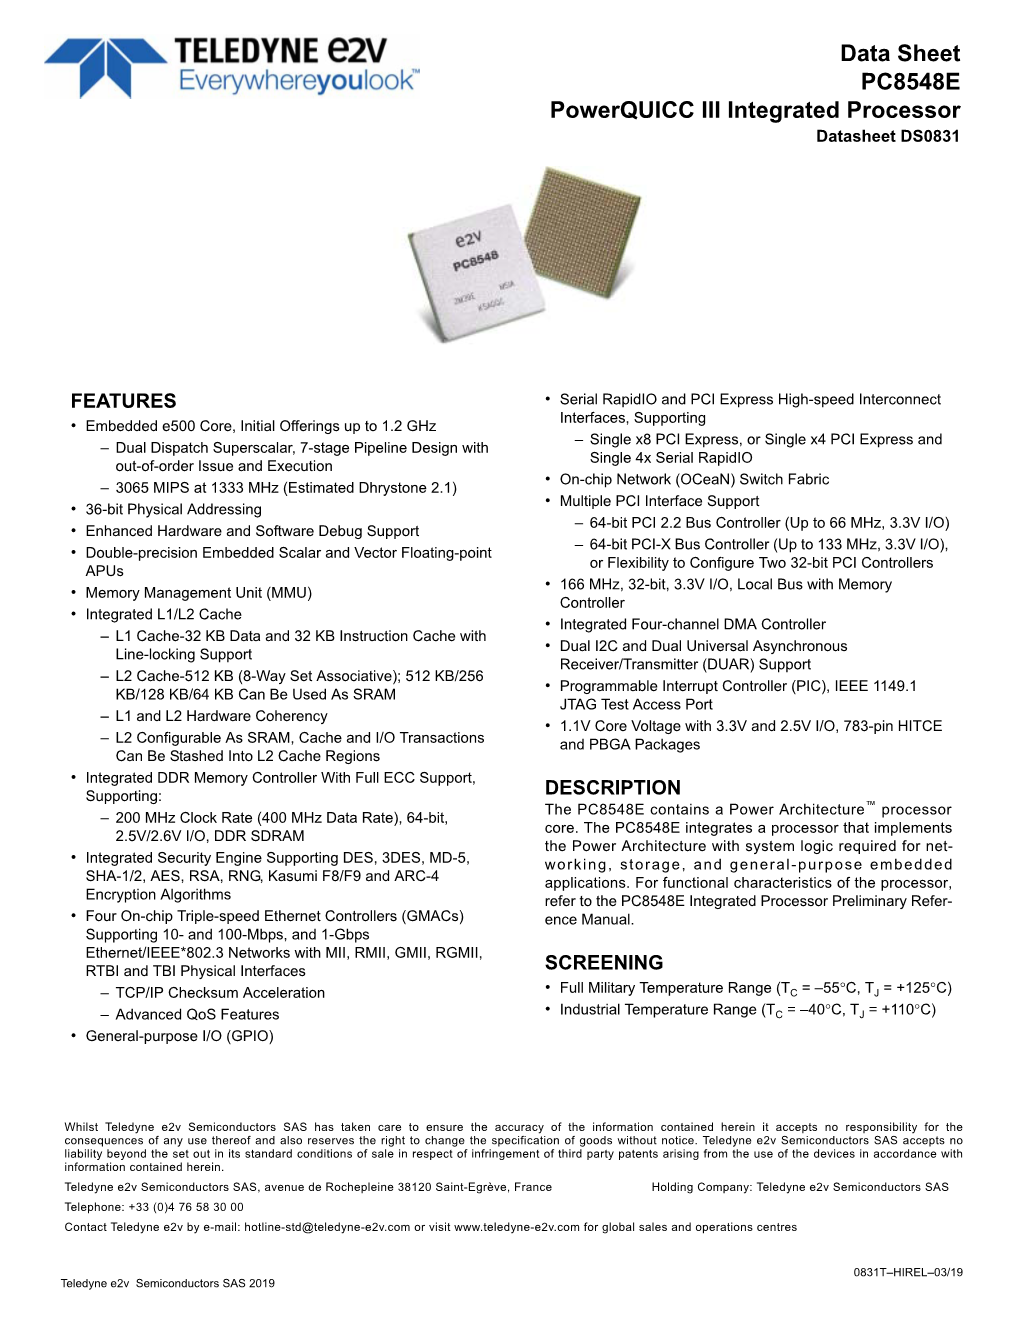 Data Sheet PC8548E Powerquicc III Integrated Processor Datasheet DS0831